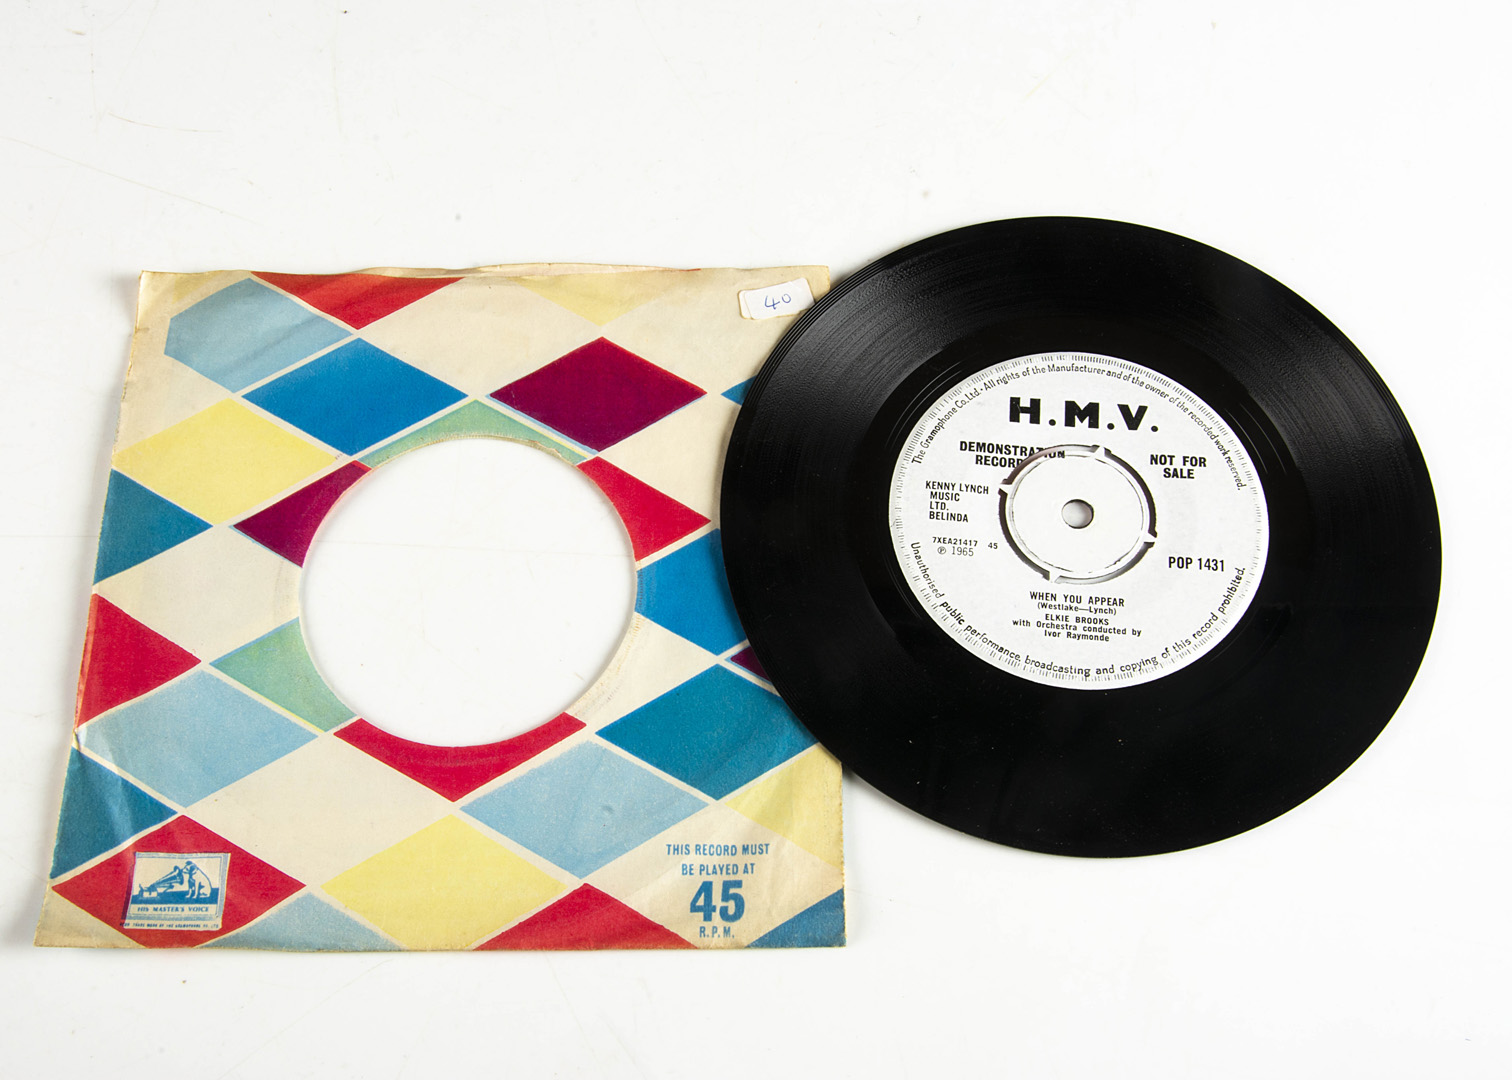 Elkie Brooks Demo Single, He's Gotta Love Me b/w When You Appear - Original UK Demo release 1965 - Image 2 of 2